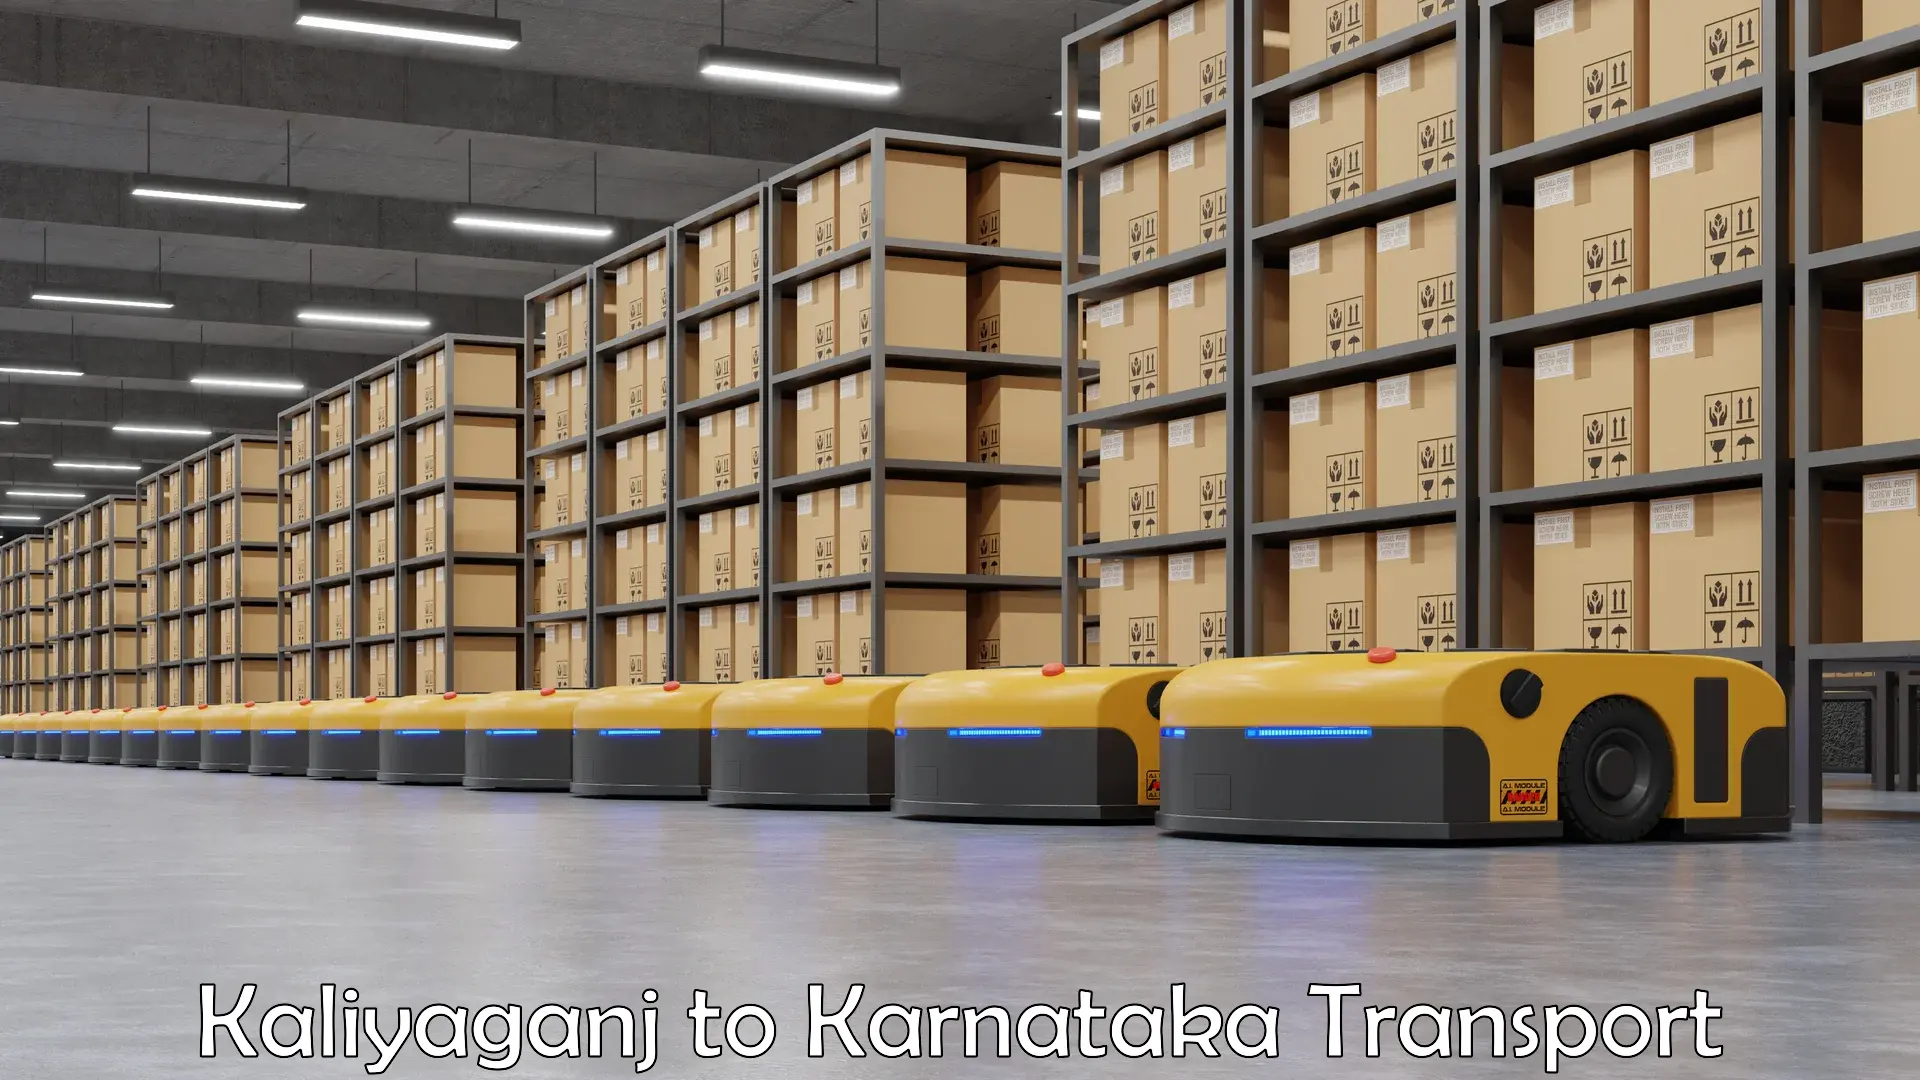 Truck transport companies in India Kaliyaganj to Belgaum